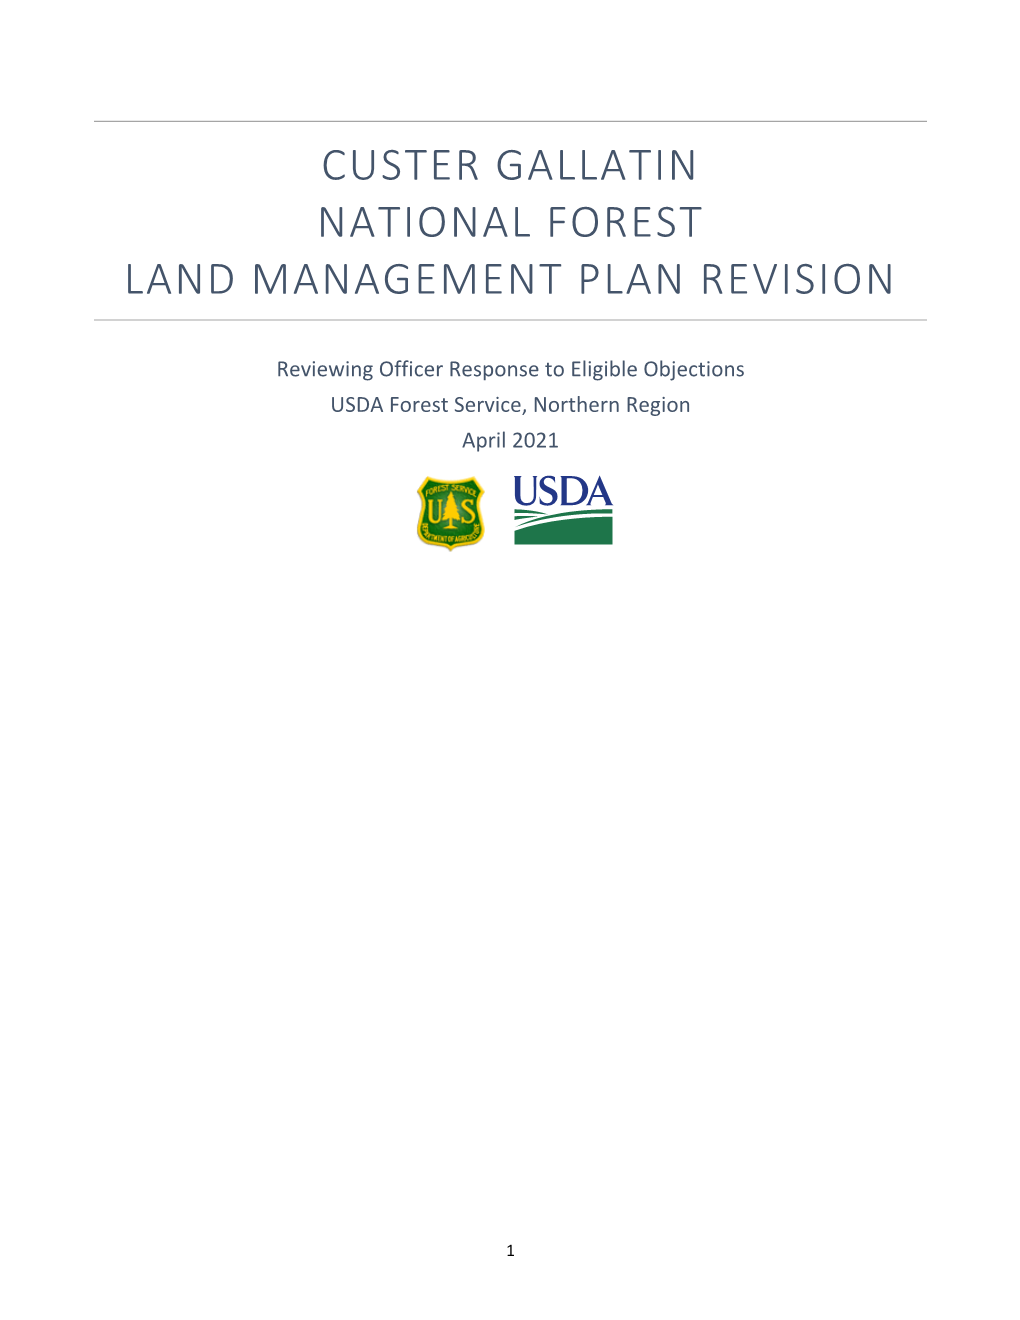 Custer Gallatin National Forest Land Mangement Plan Revision